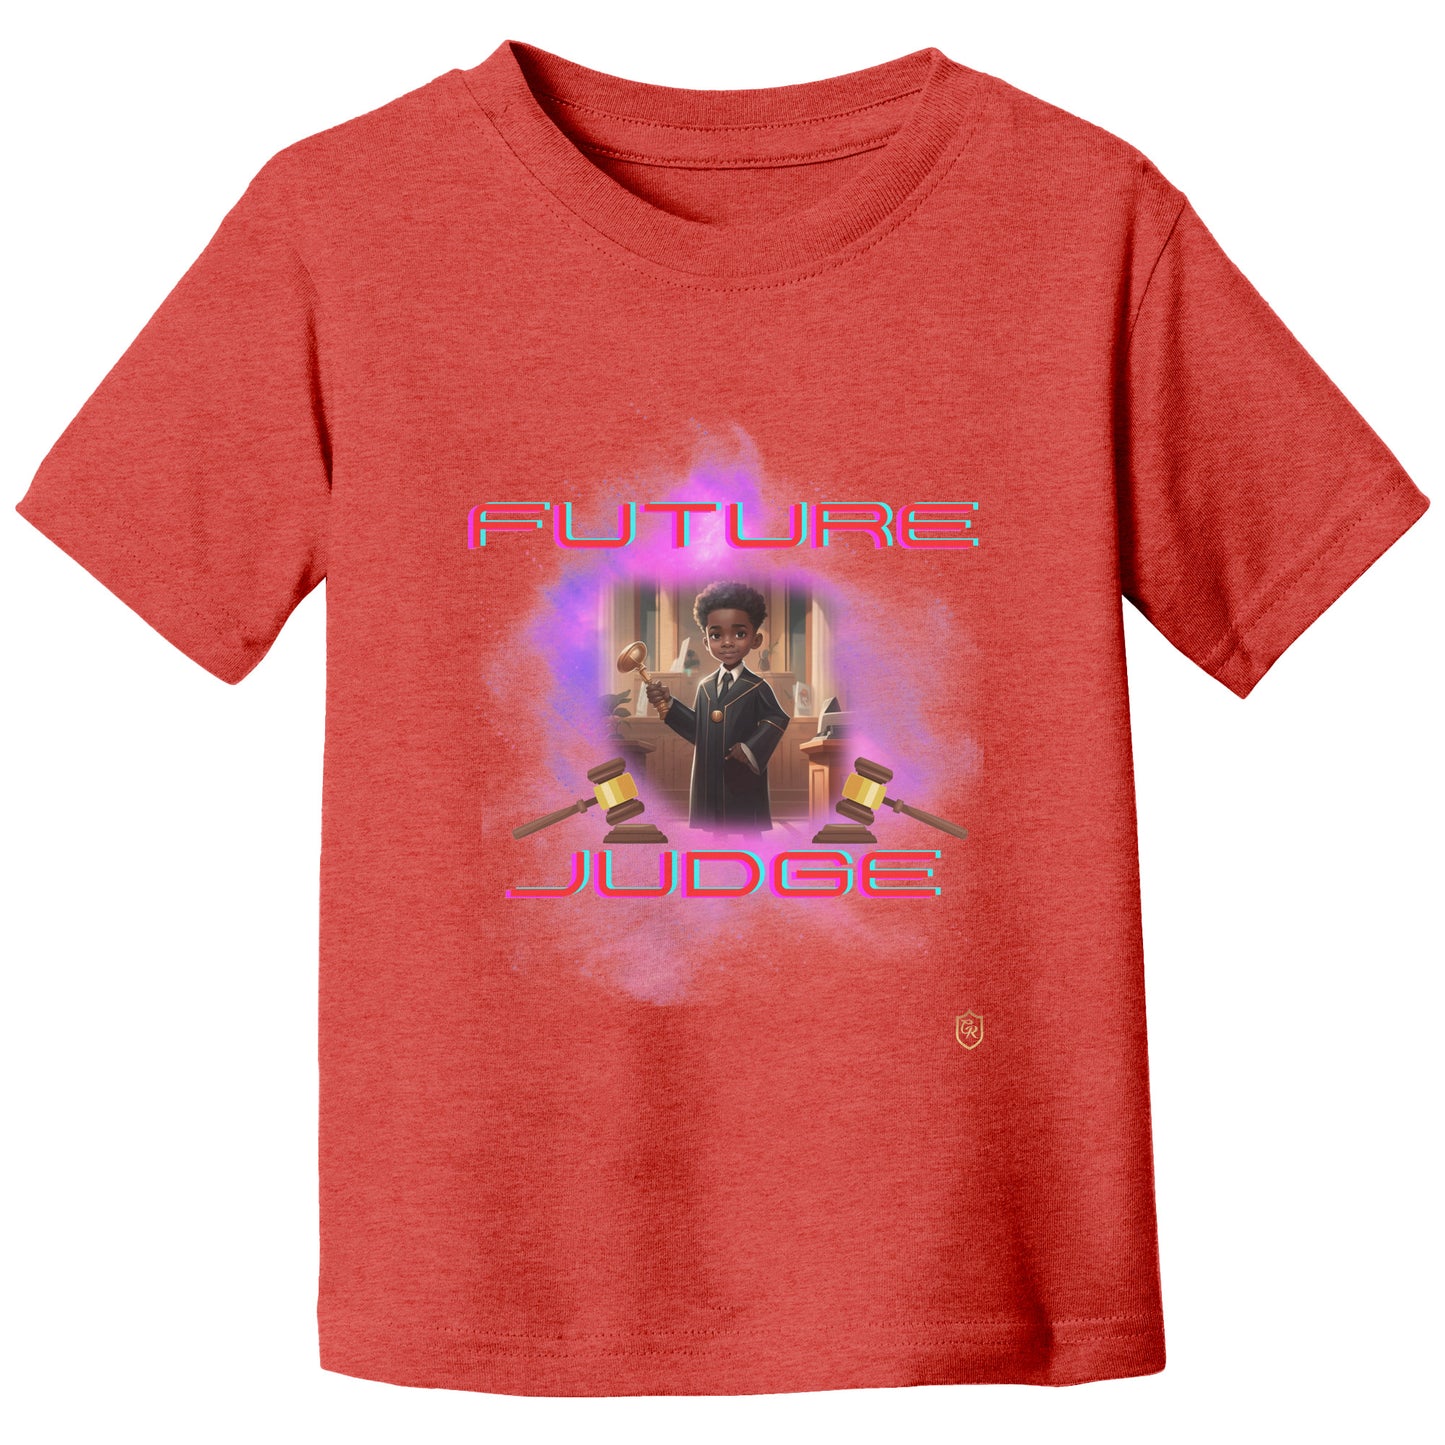 Boy's Future Judge T-shirt